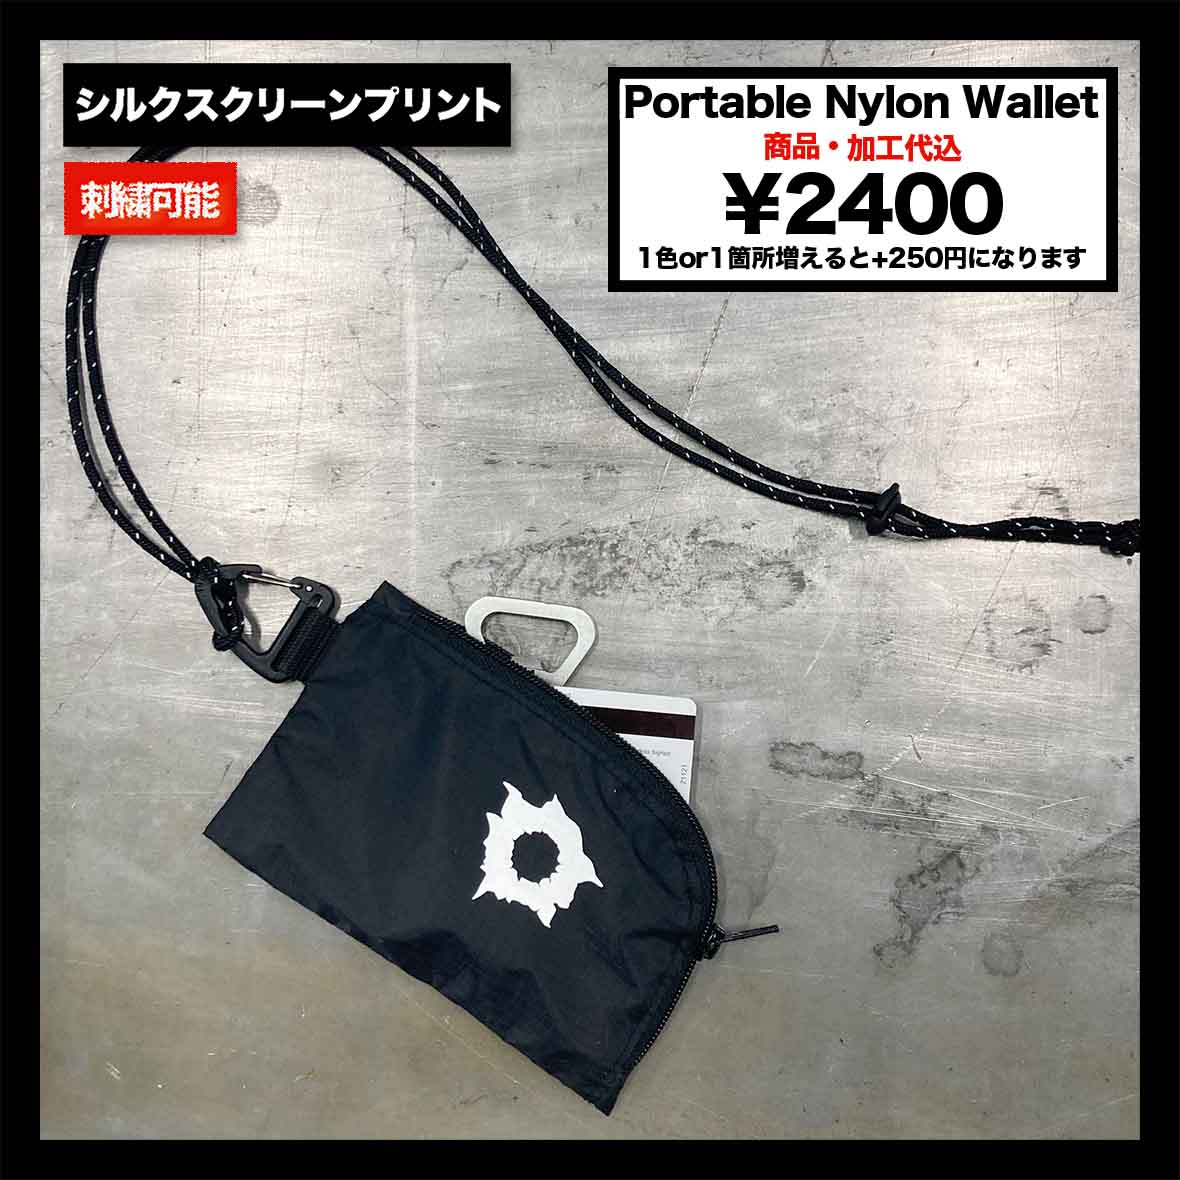 Portable Nylon Wallet (品番CPSEW010)